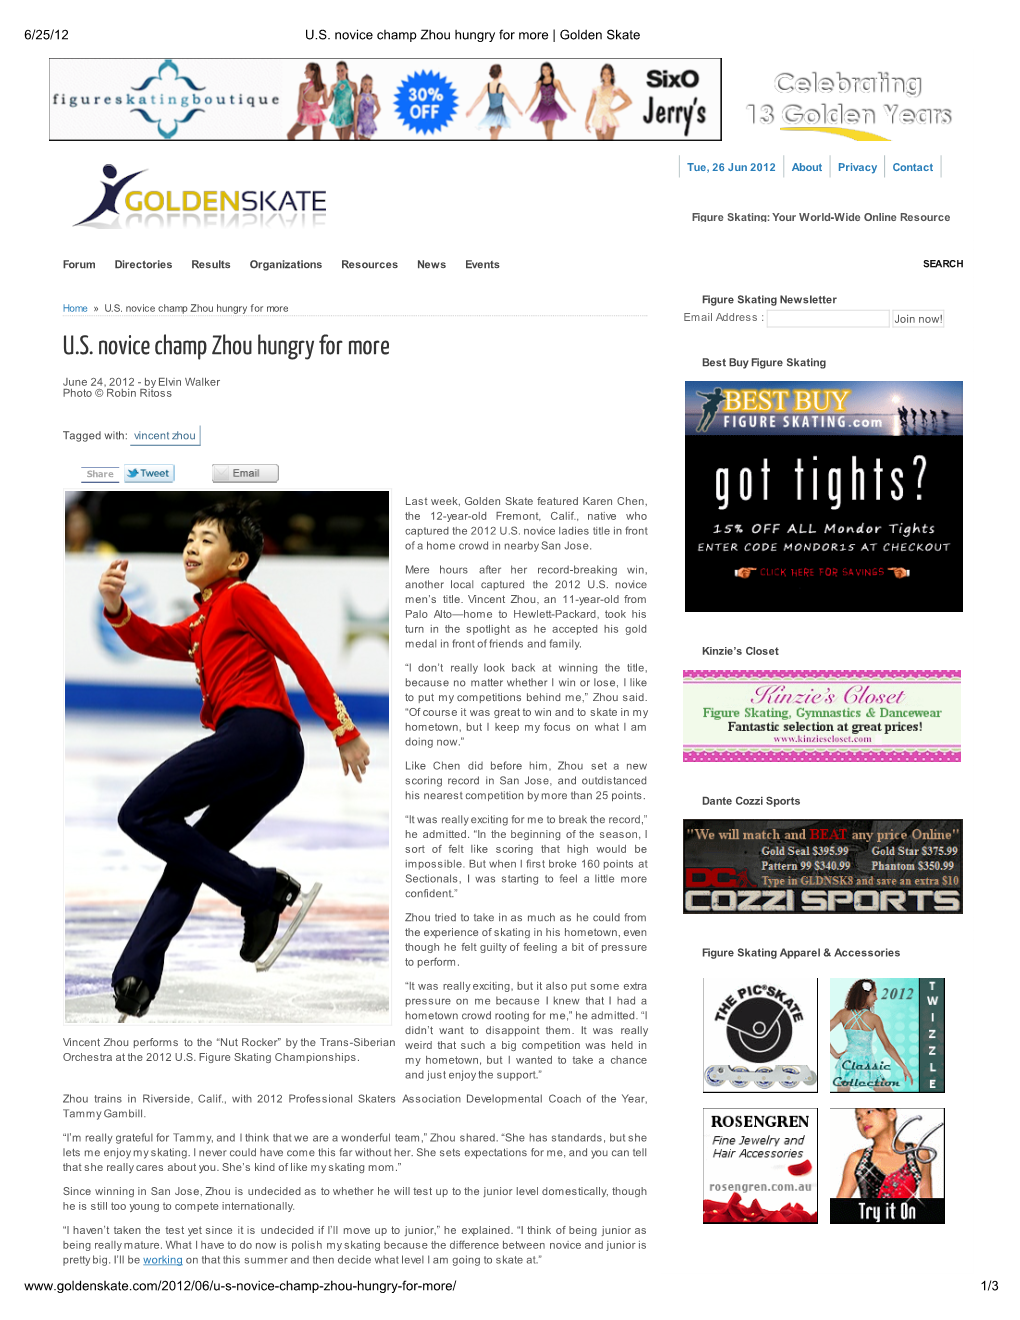 U.S. Novice Champ Zhou Hungry for More | Golden Skate